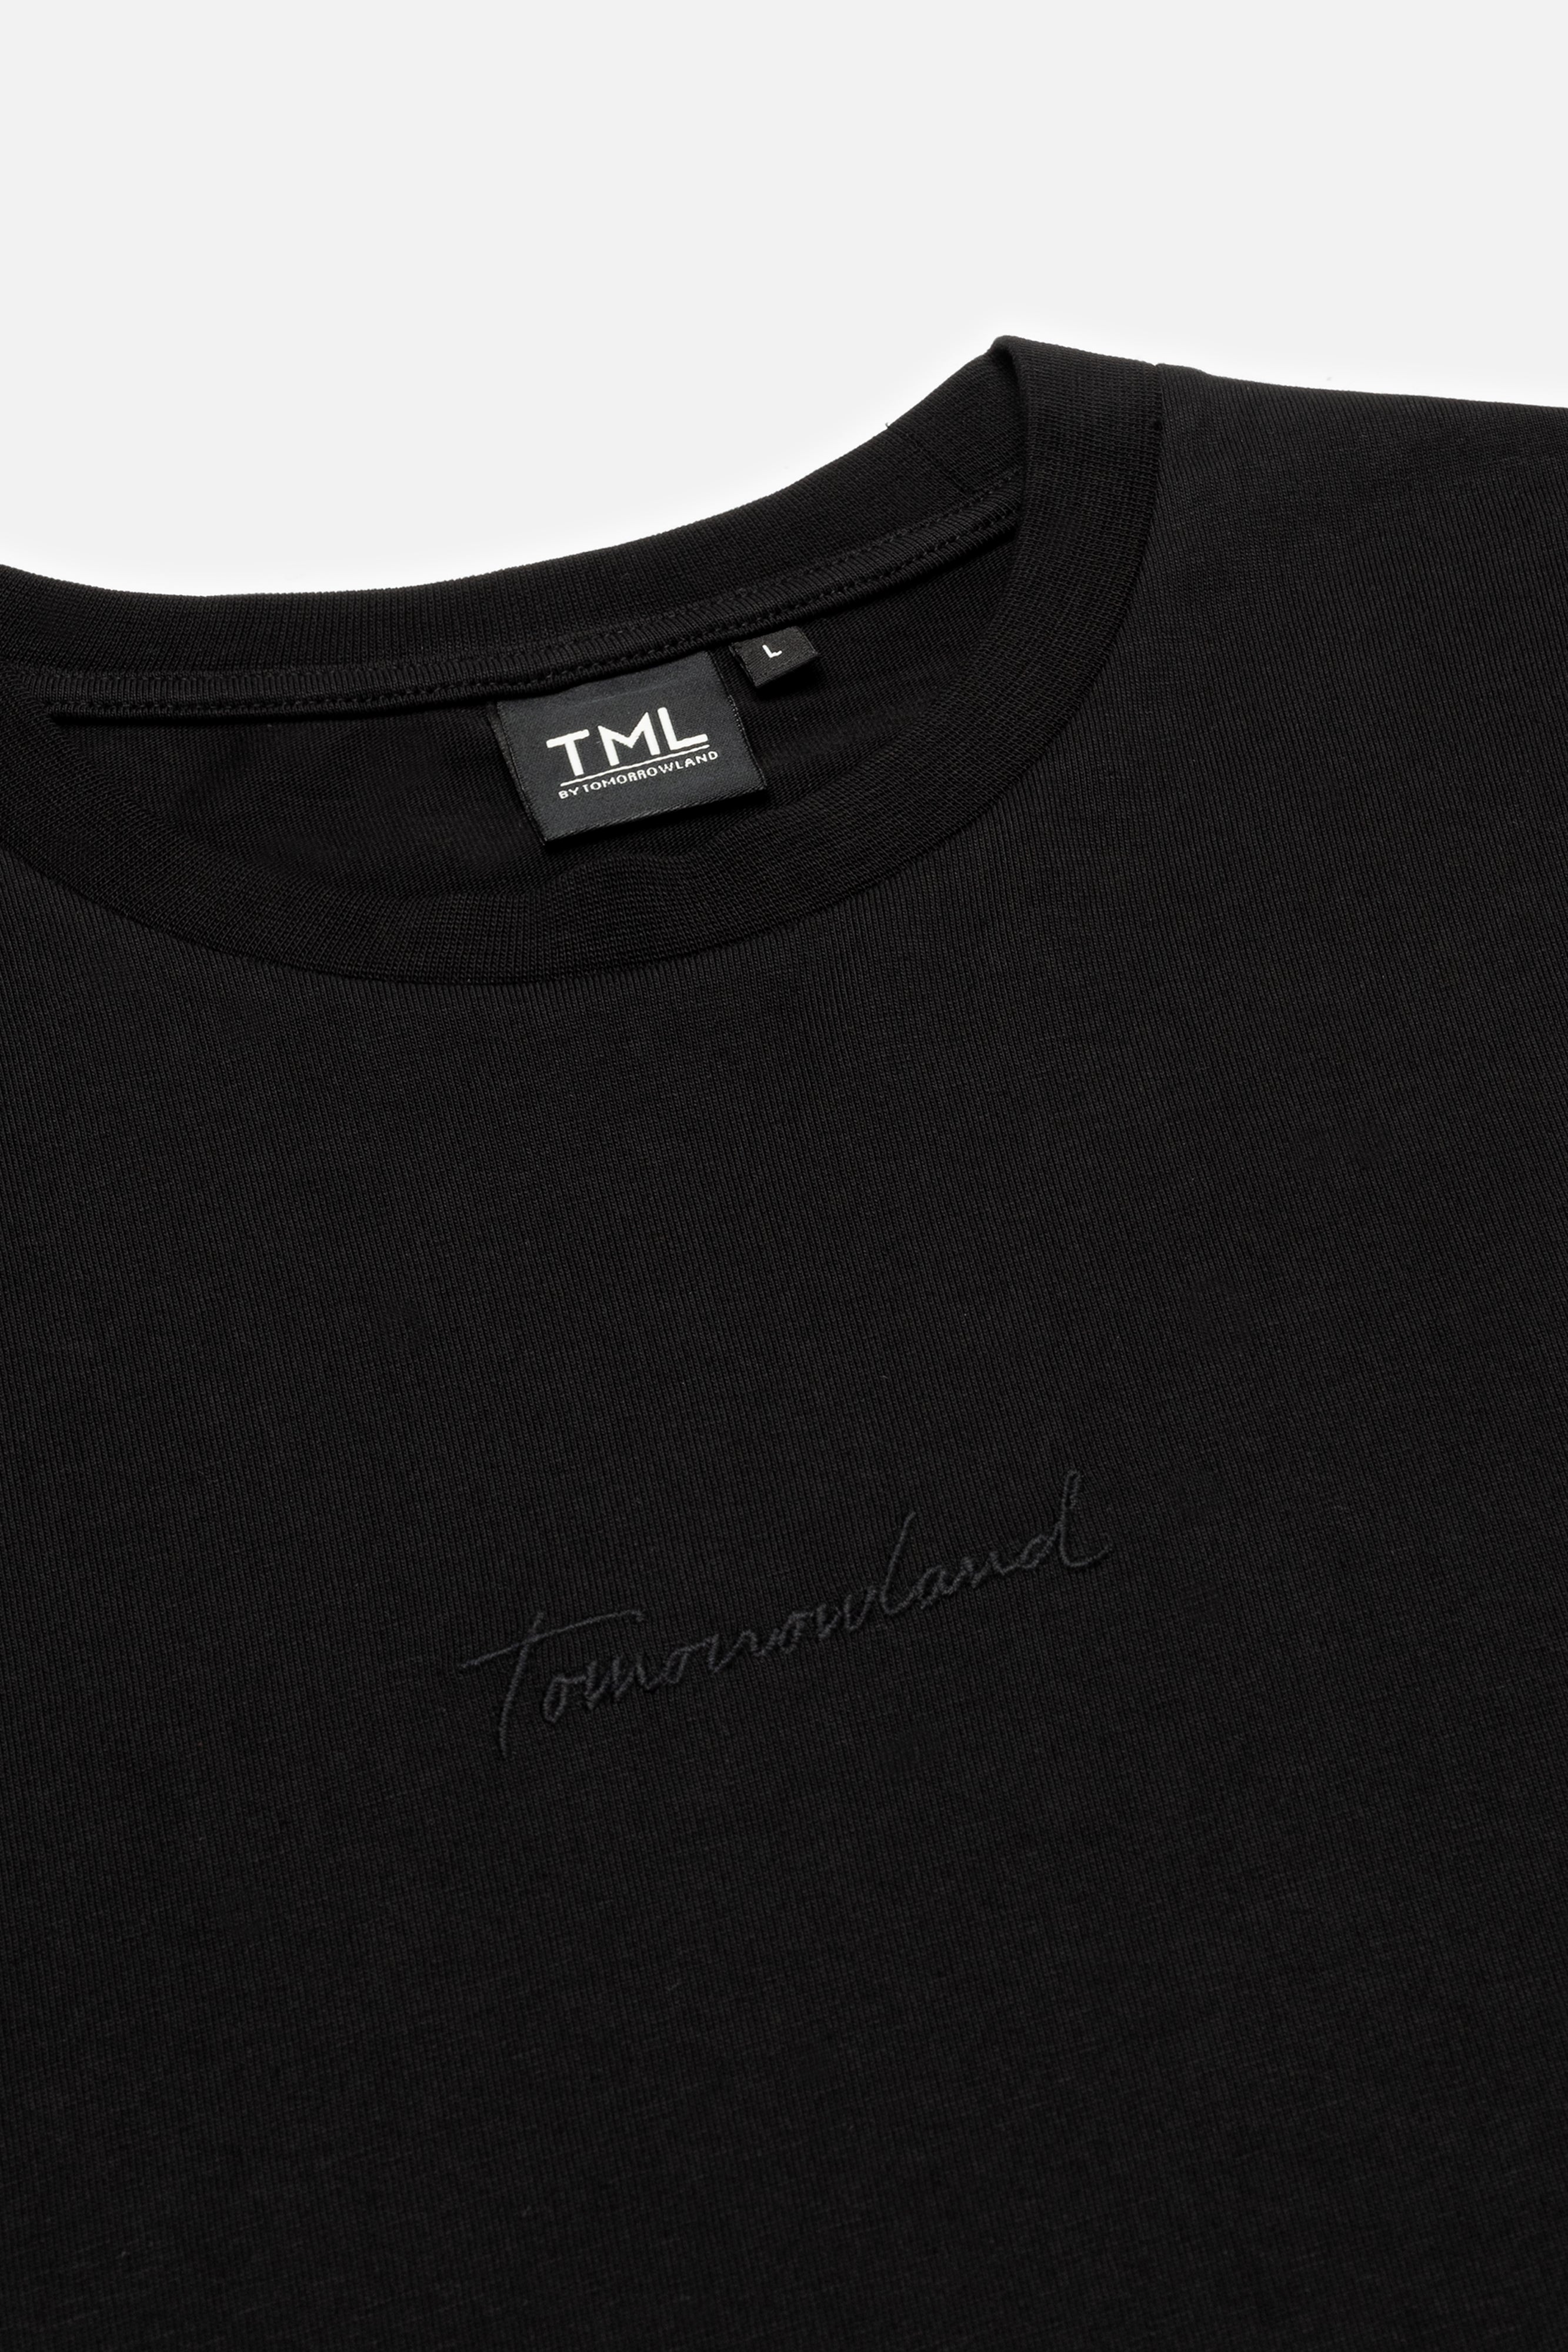 All T-Shirts – Tomorrowland Store